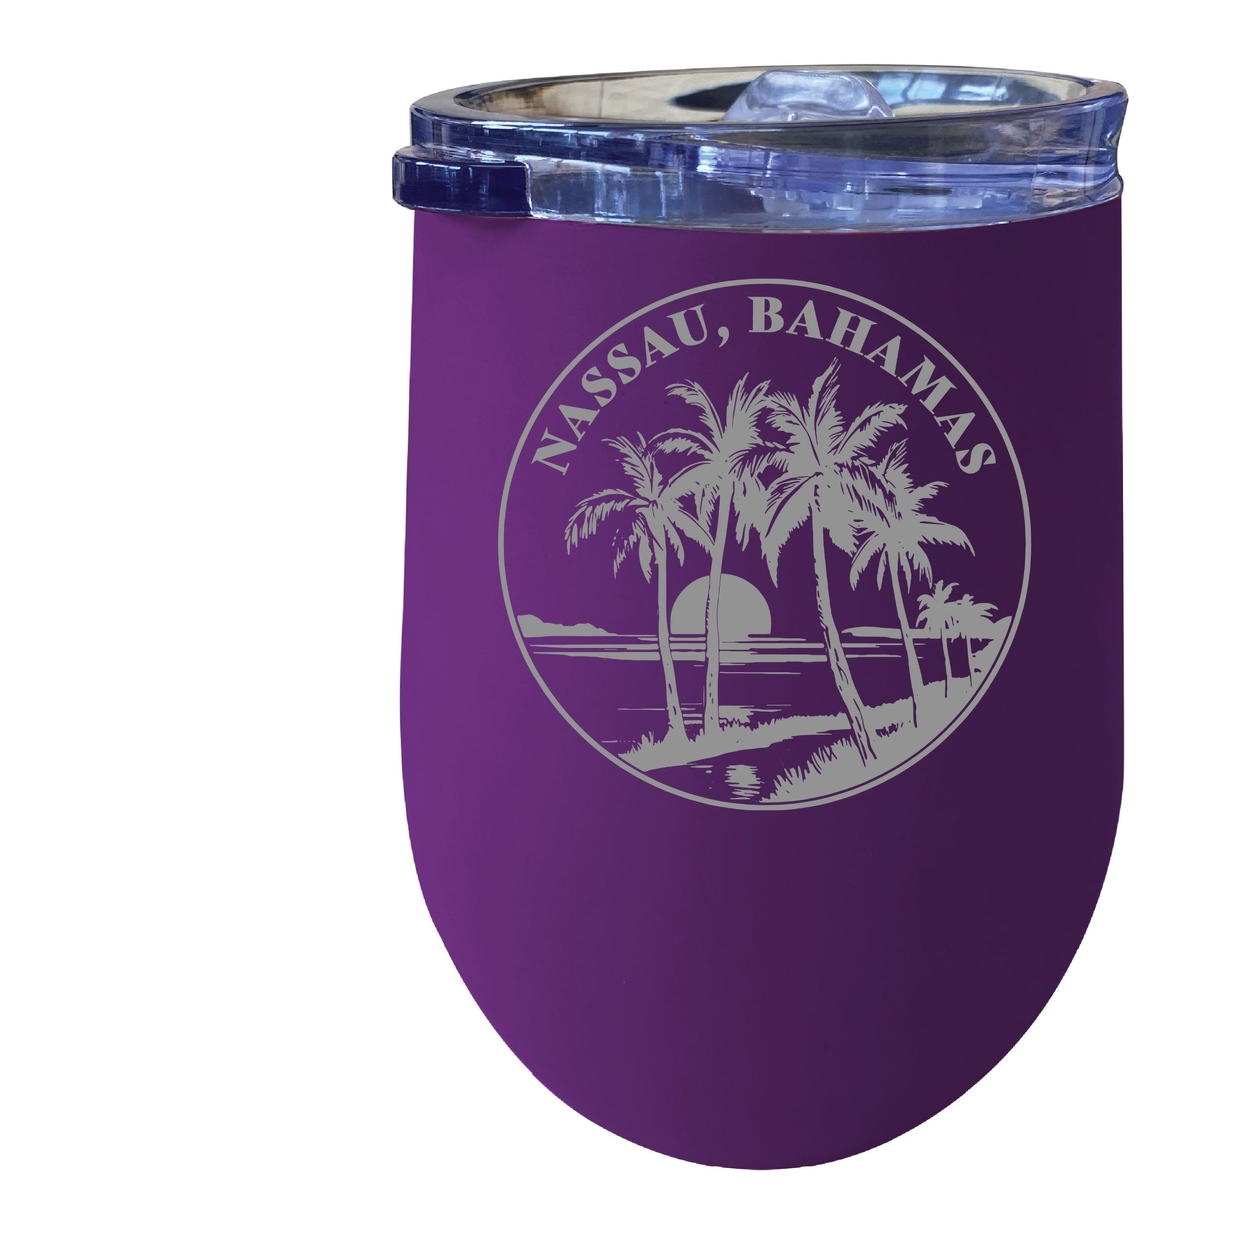 Nassau The Bahamas Souvenir 12 Oz Engraved Insulated Wine Stainless Steel Tumbler - Purple,,Single Unit